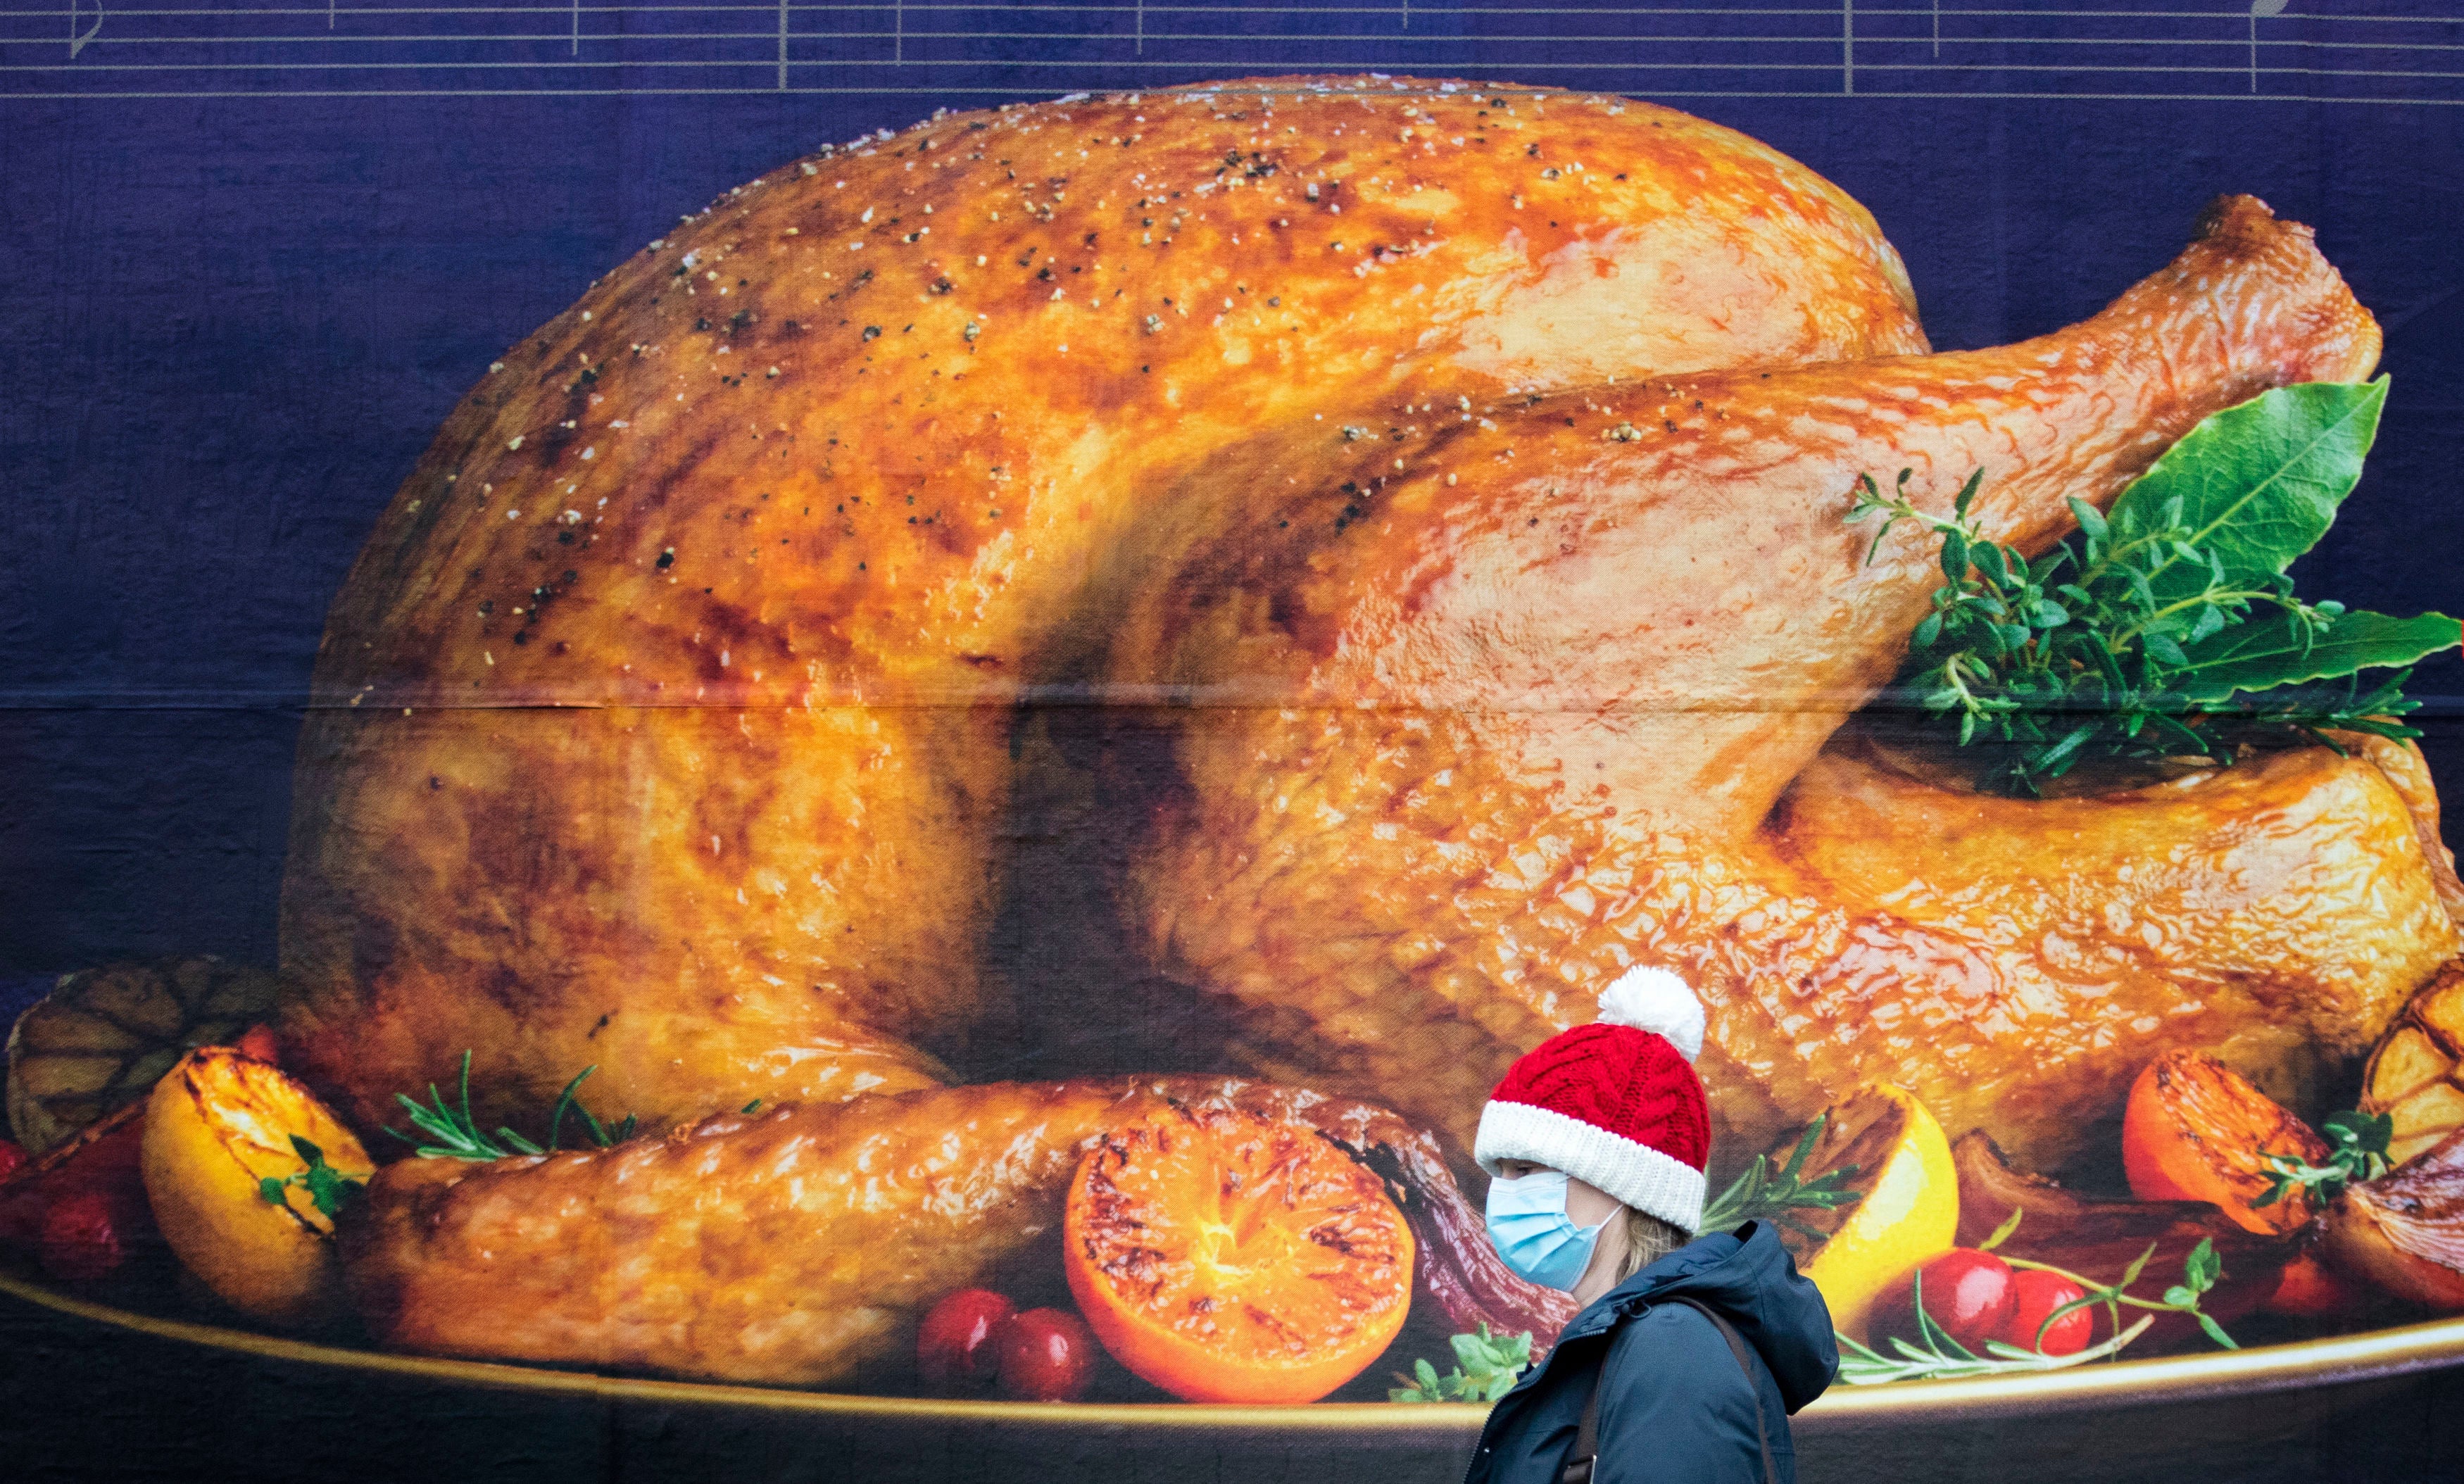 A shopper passes a billboard poster featuring a Christmas turkey in Edinburgh city centre